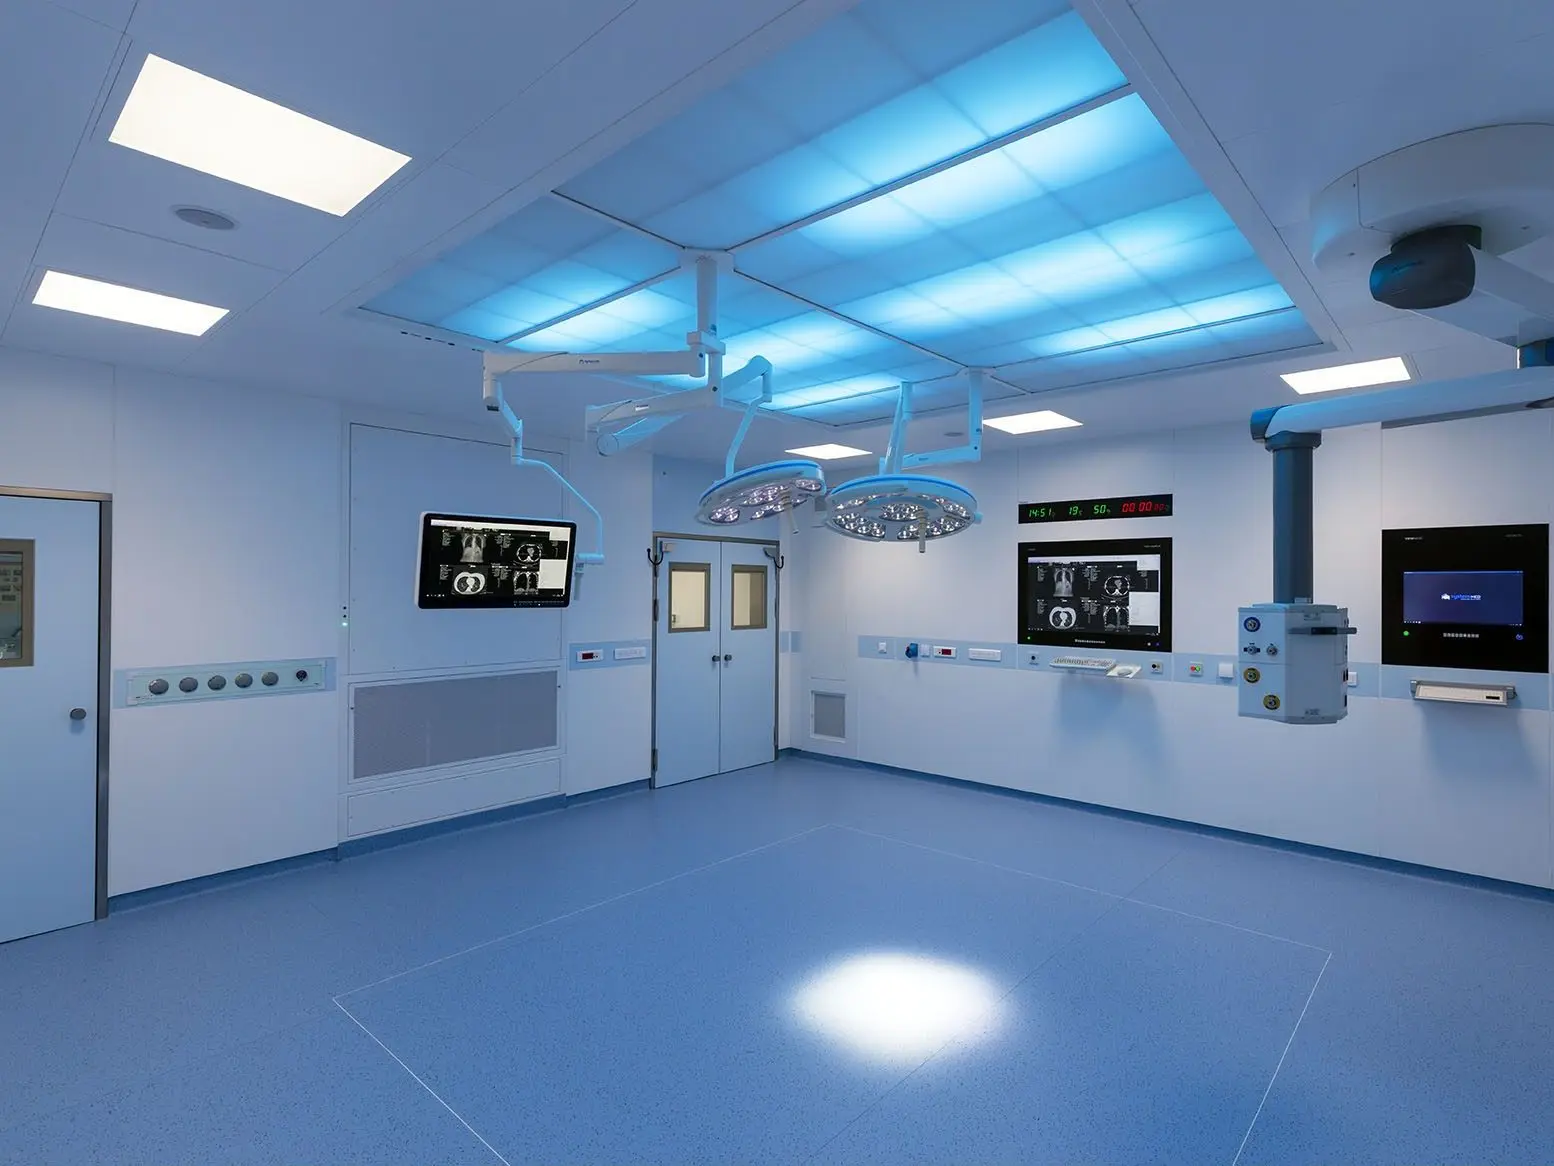 Manual Swing Surgical Room Doors Modular Operating Room Hospital Clean Room Hermetic 4